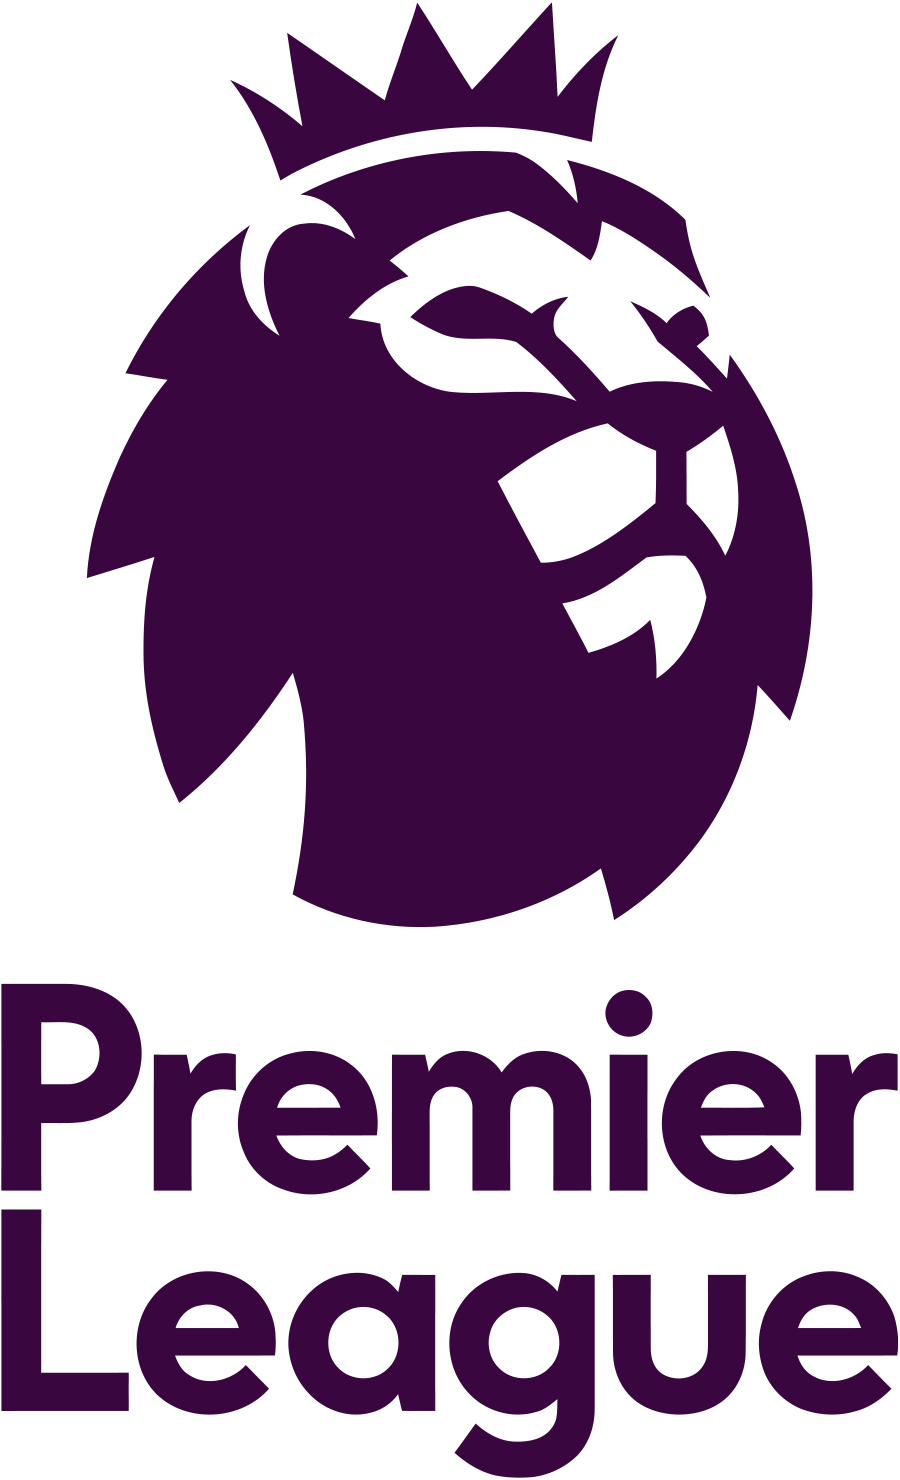 Premier League Logo Fifplay